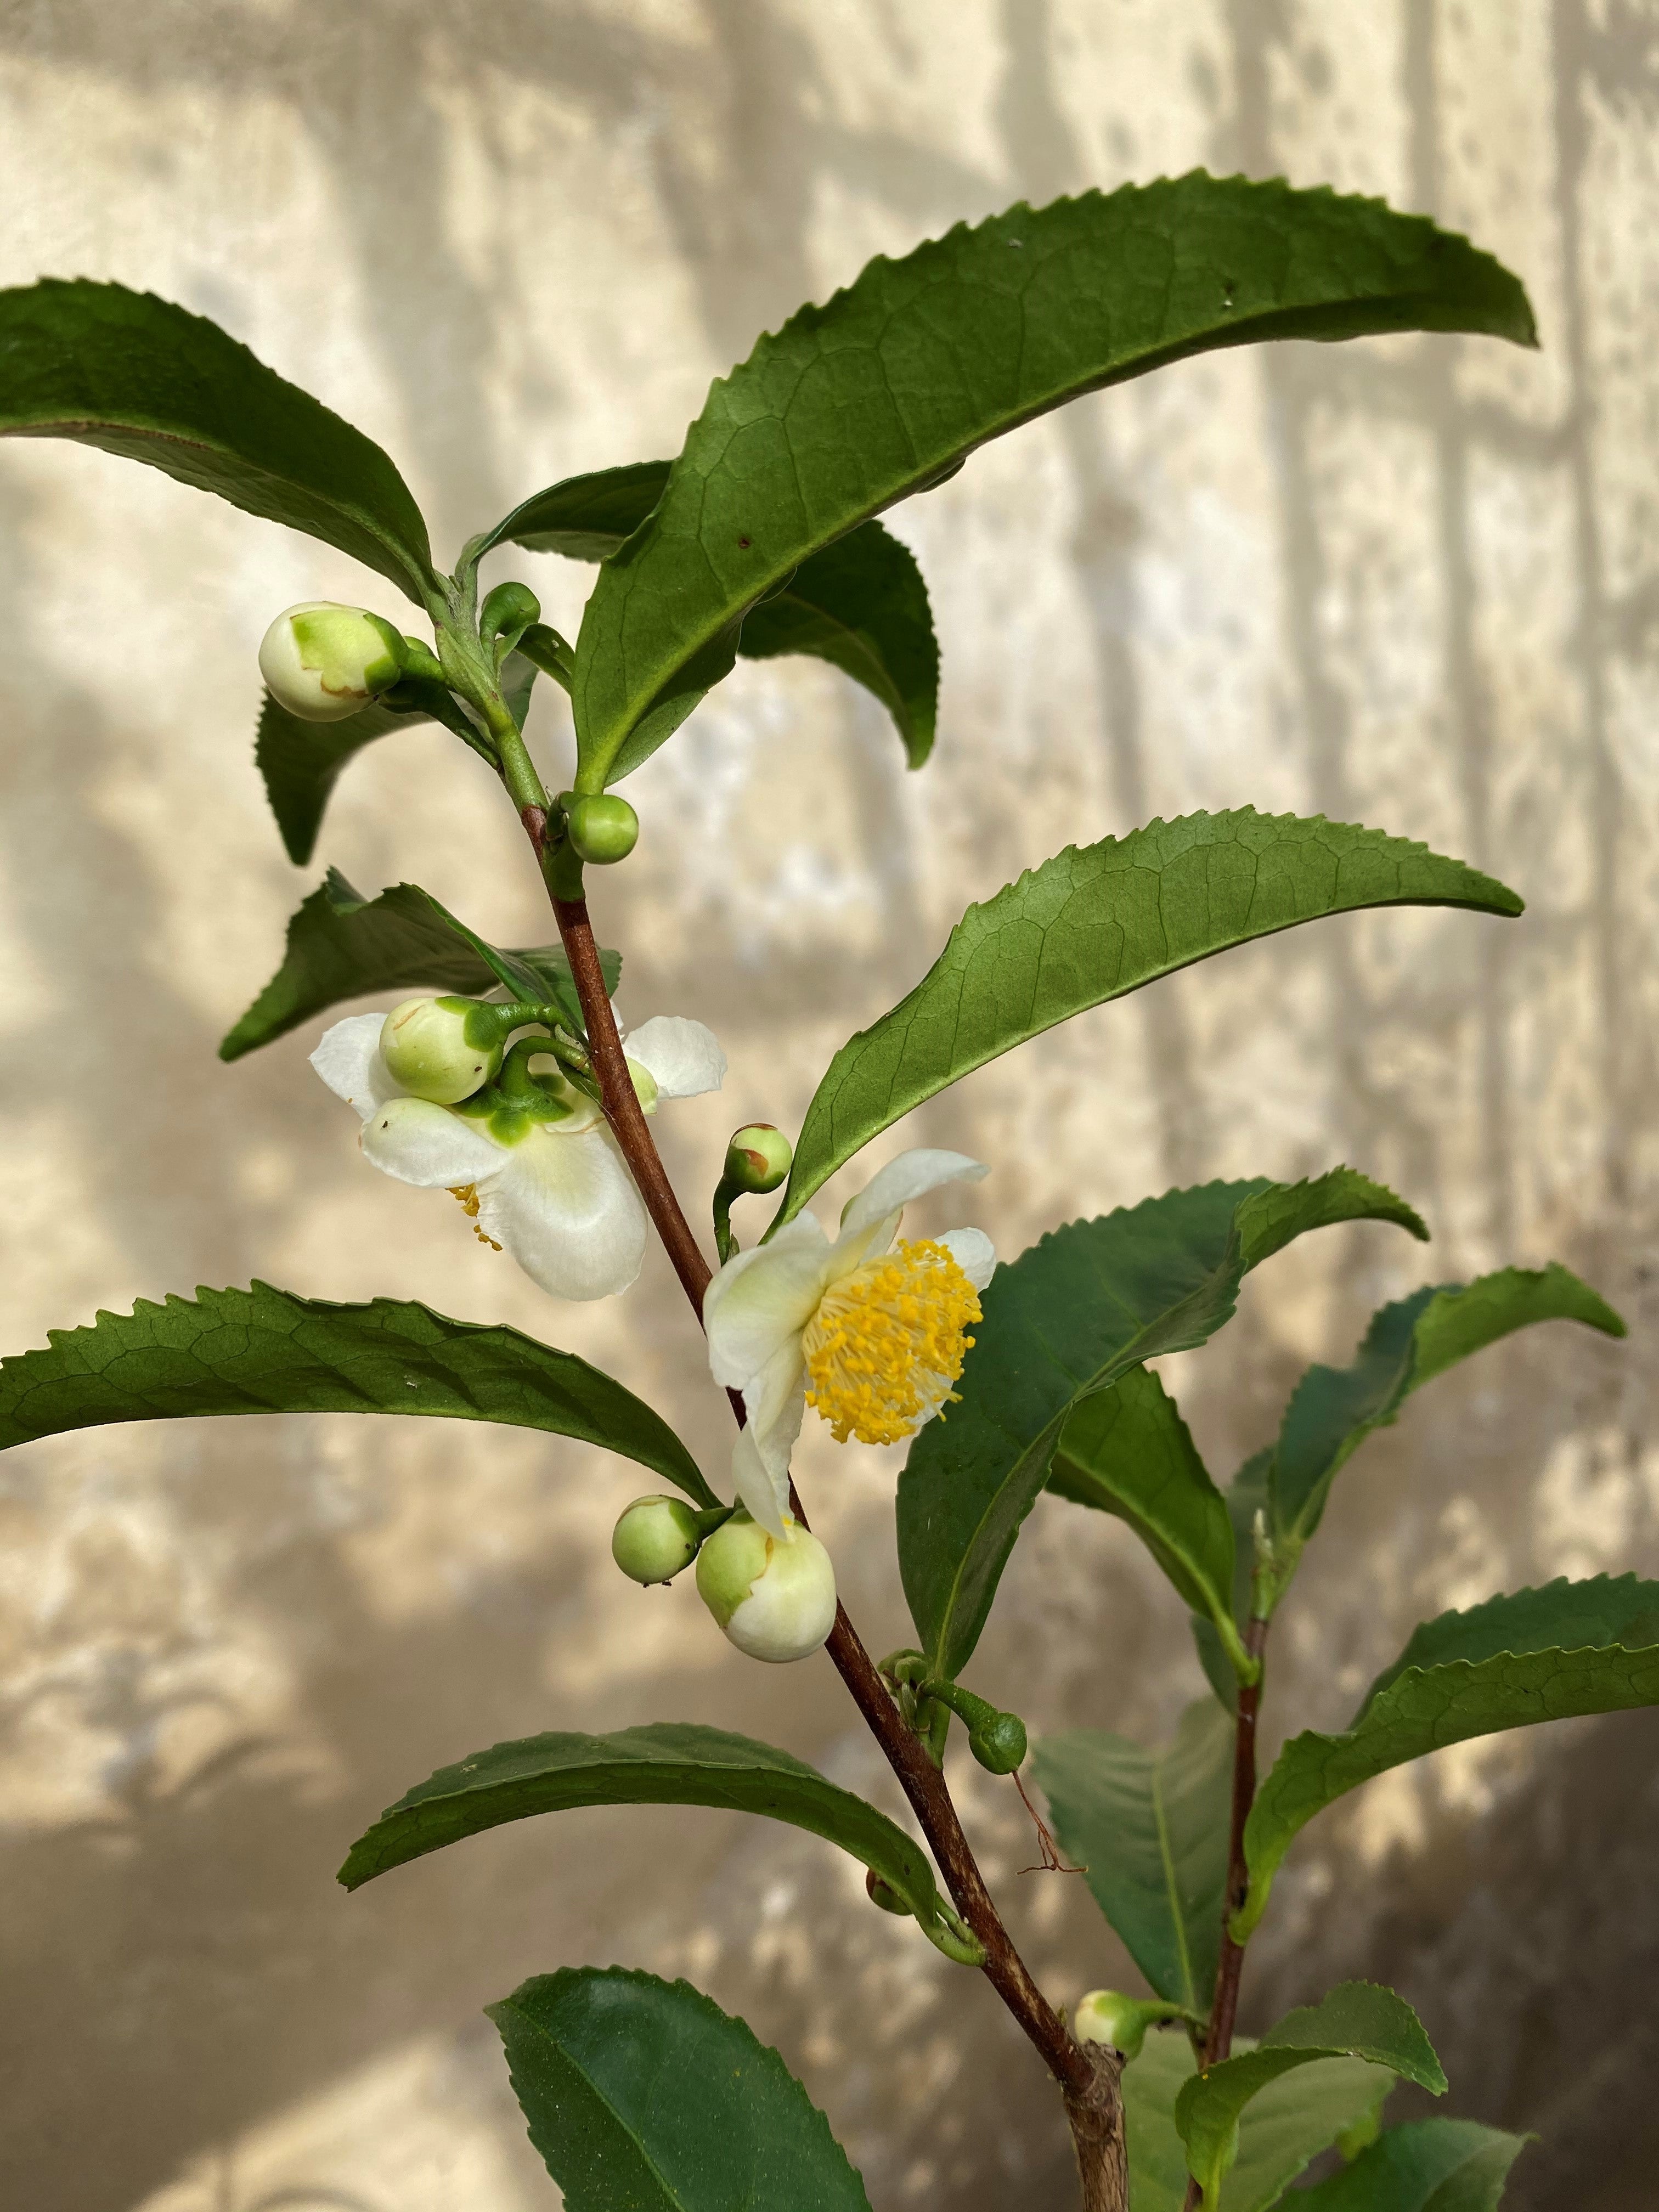 Camellia sinensis, the tea plant